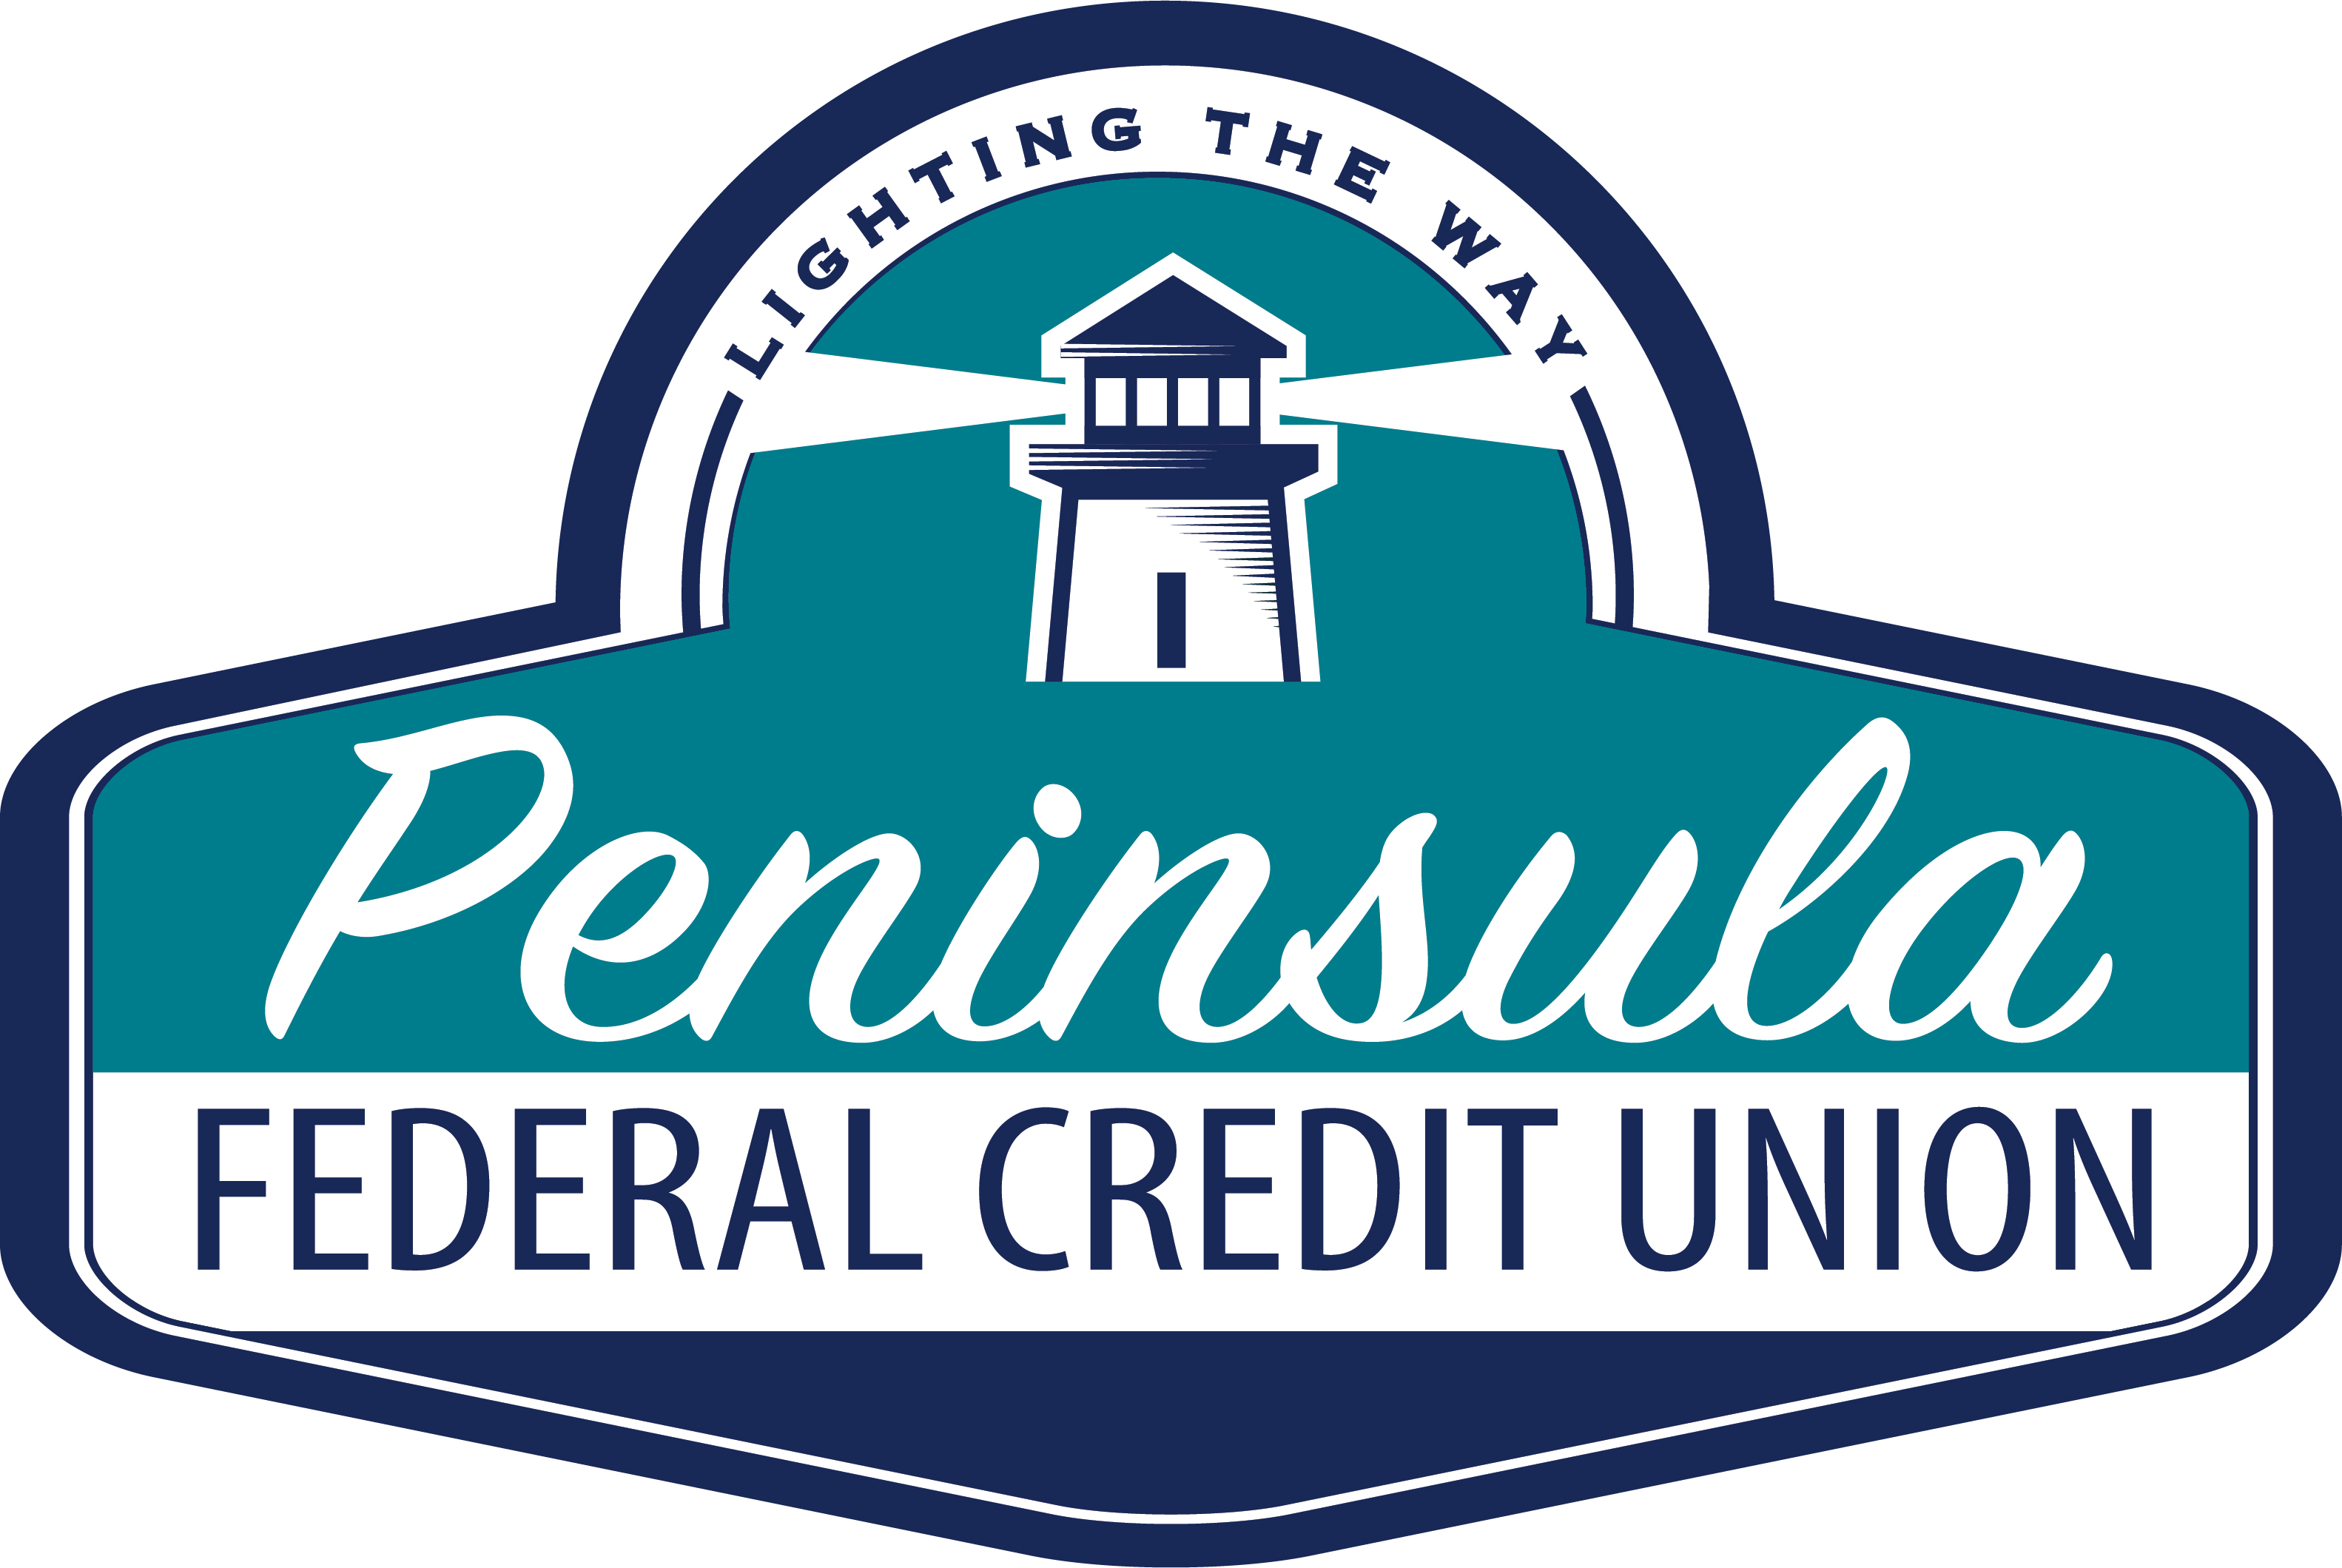 Peninsula Federal Credit Union